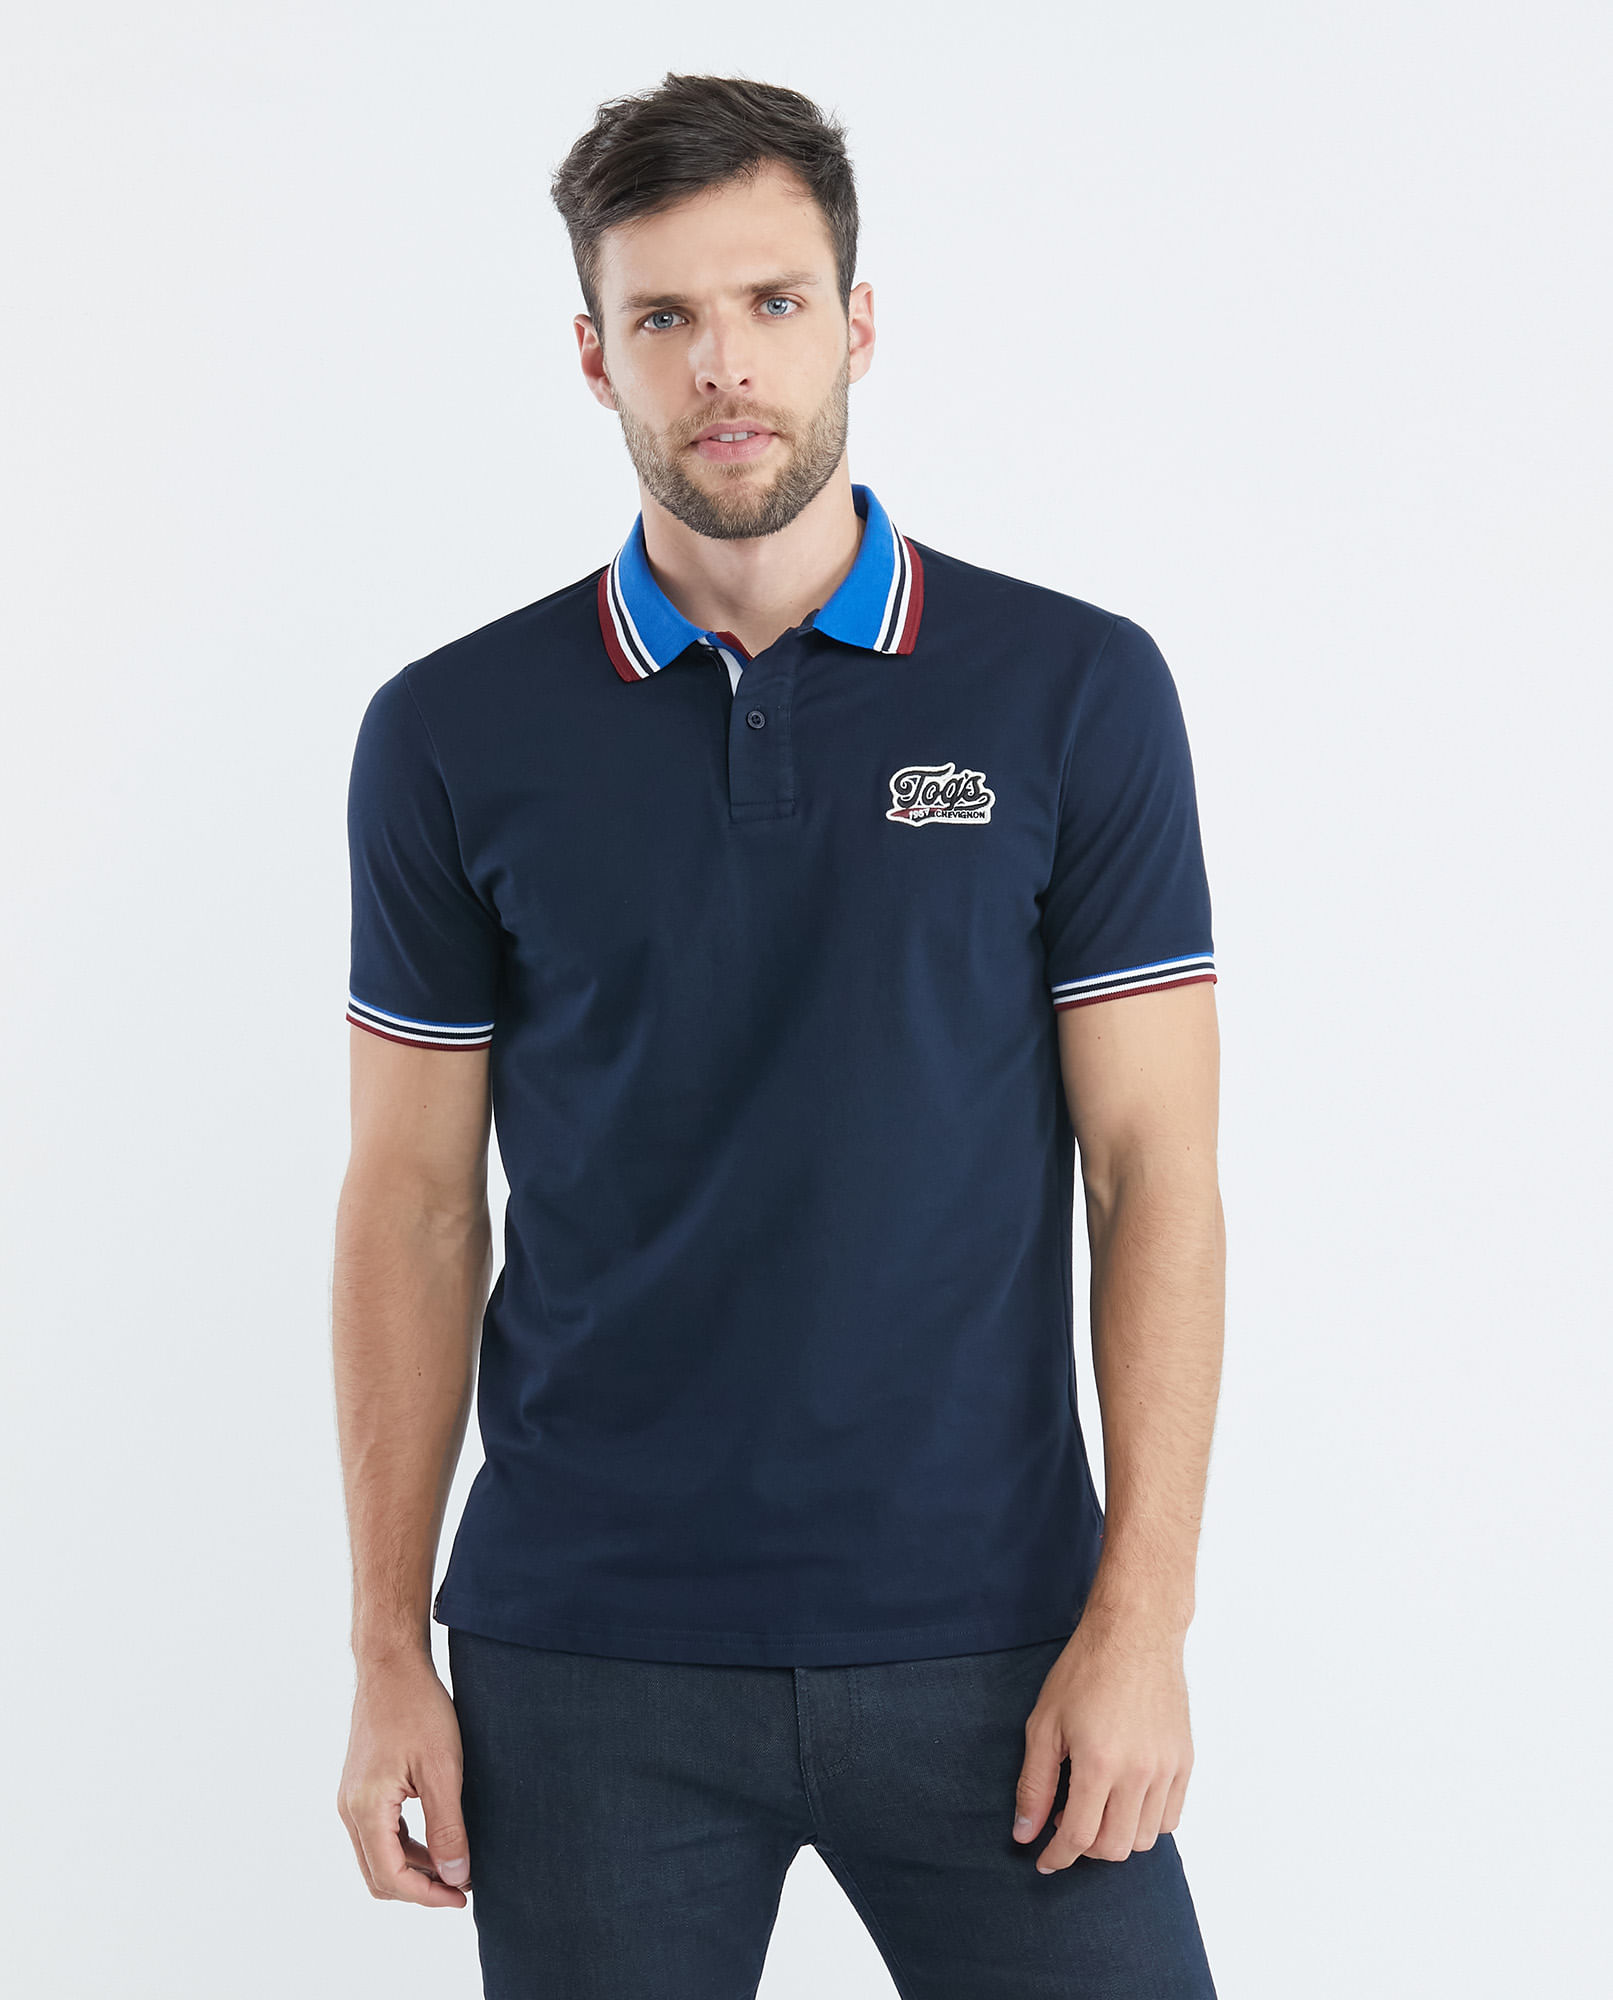 Camiseta de Hombre Tipo Polo, Classic Fit - TOGS Tejidos Rayas | Tienda Online